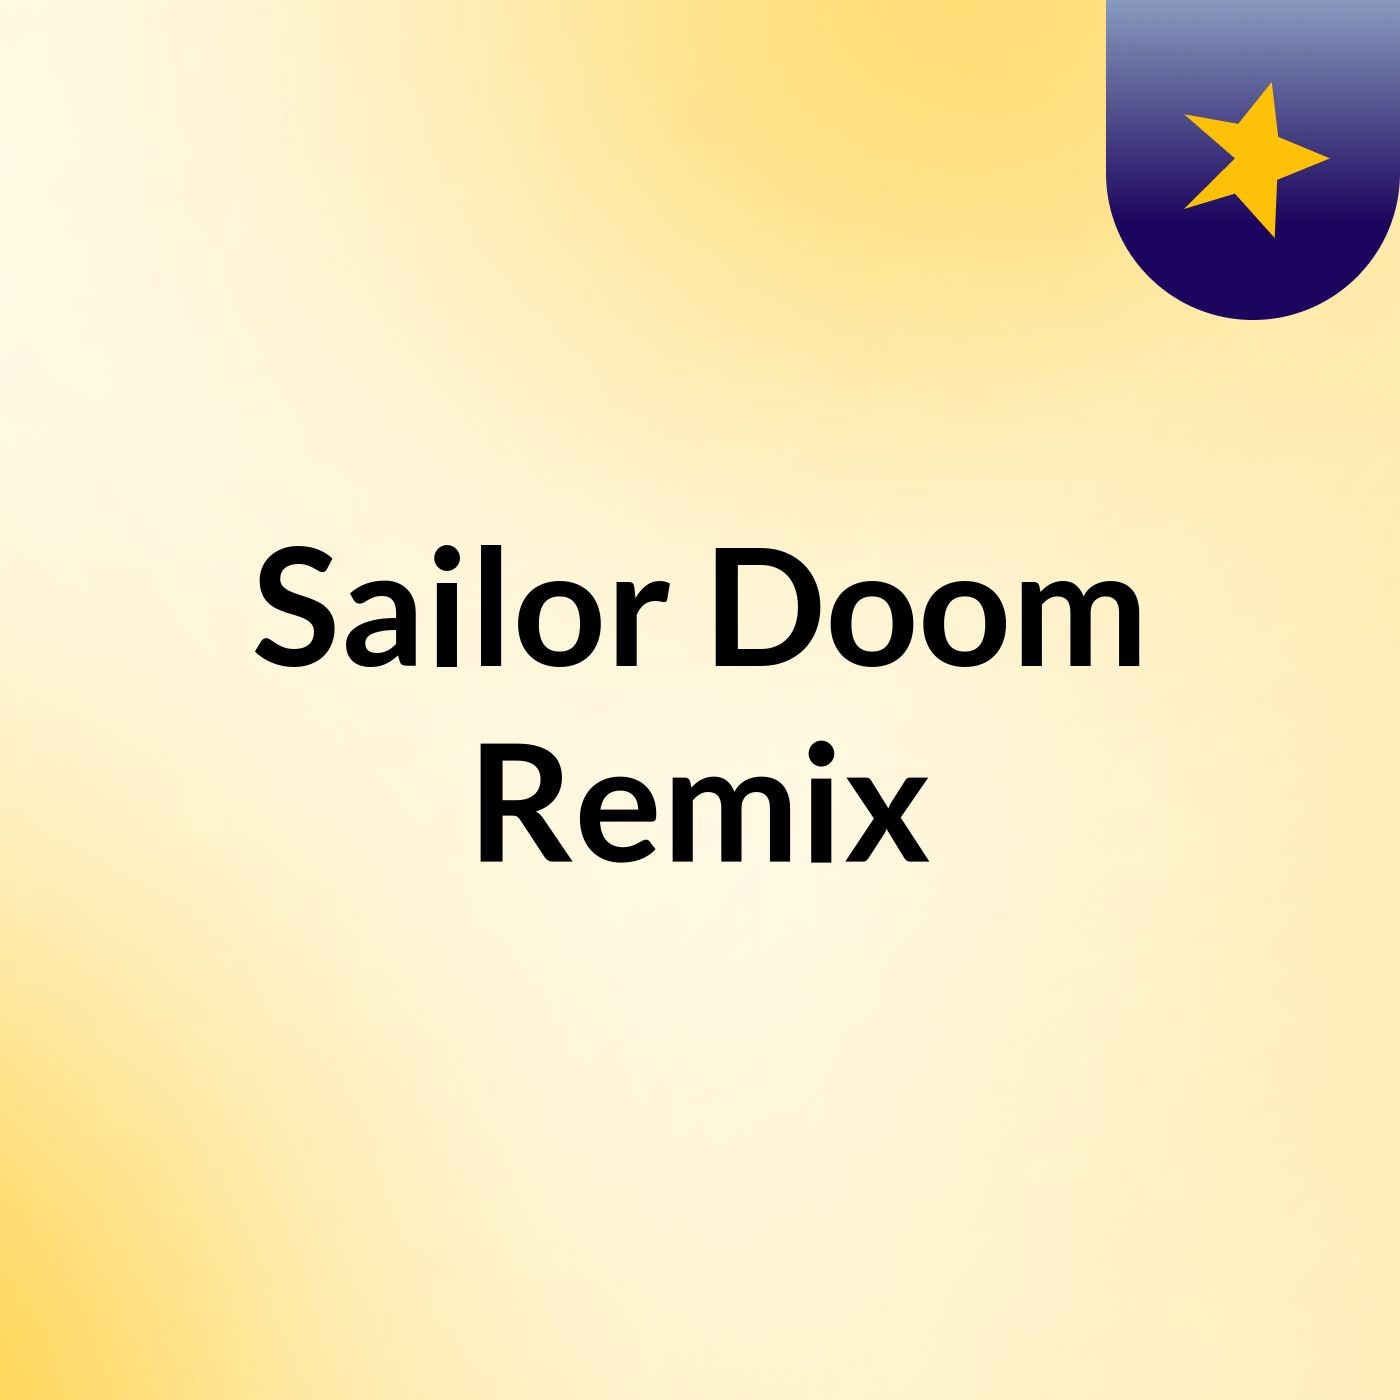 Sailor Doom Remix